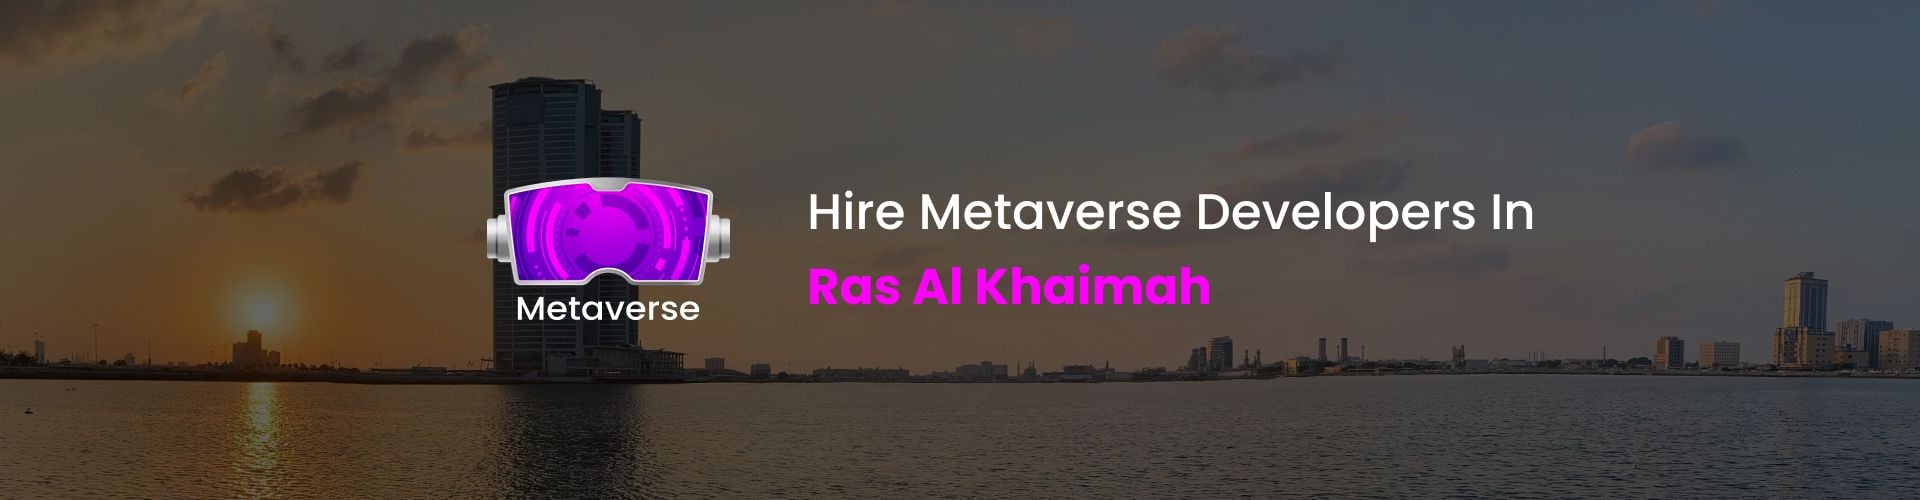 metaverse developers in Ras Al Khaimah